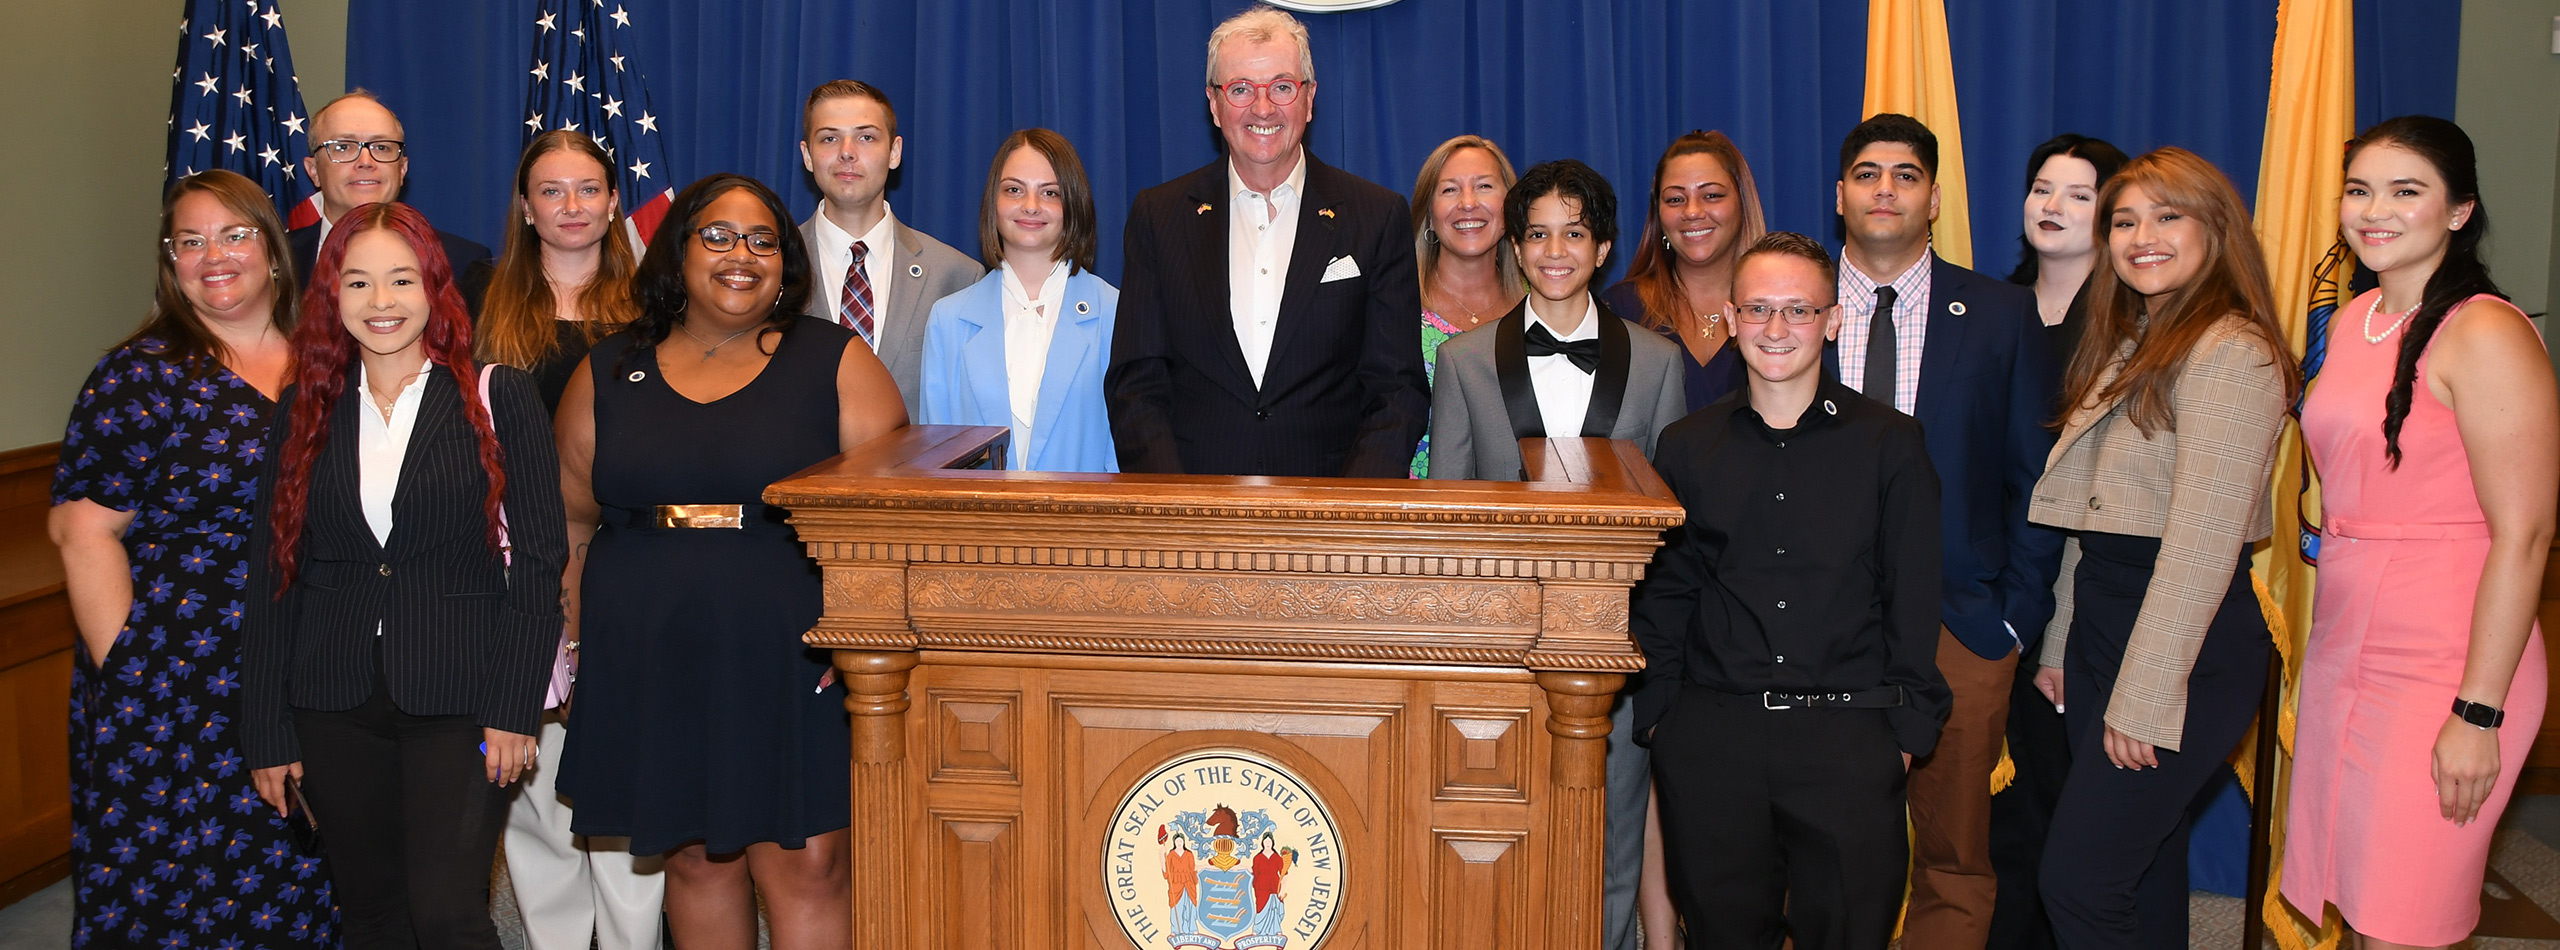 Governor Murphy signs bill establishing NJ's Siblings' Bill of Rights